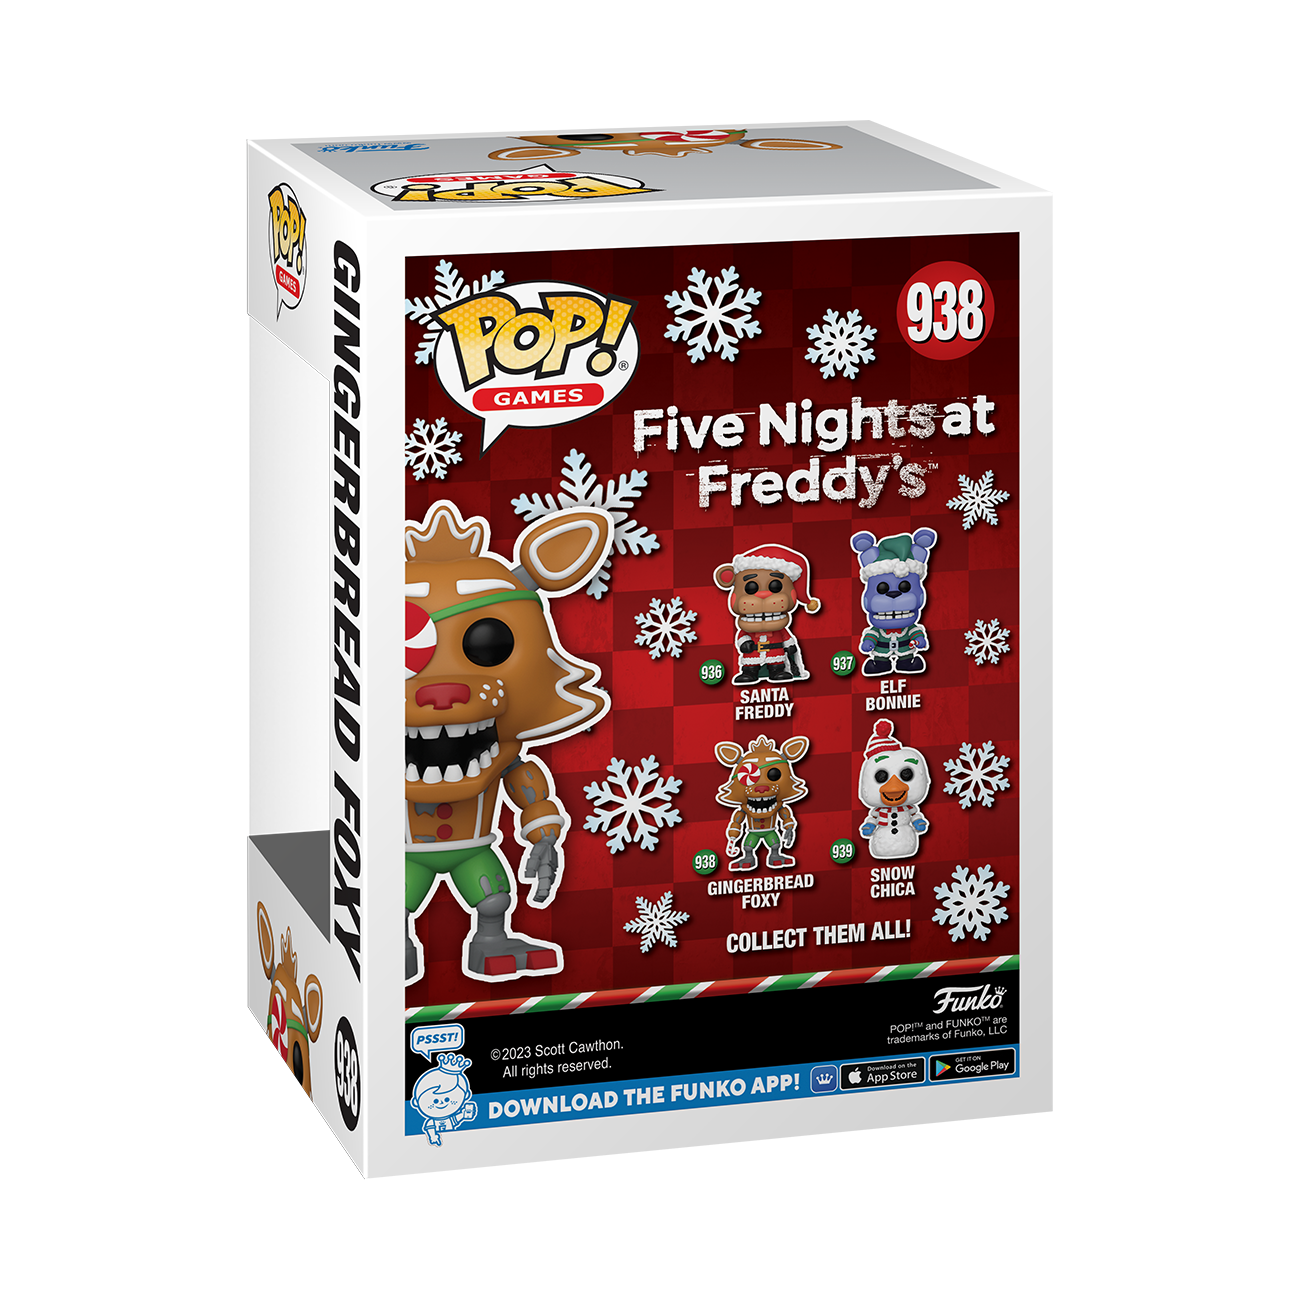 Five Nights at Freddy's Holiday Freddy 7-Inch Plush